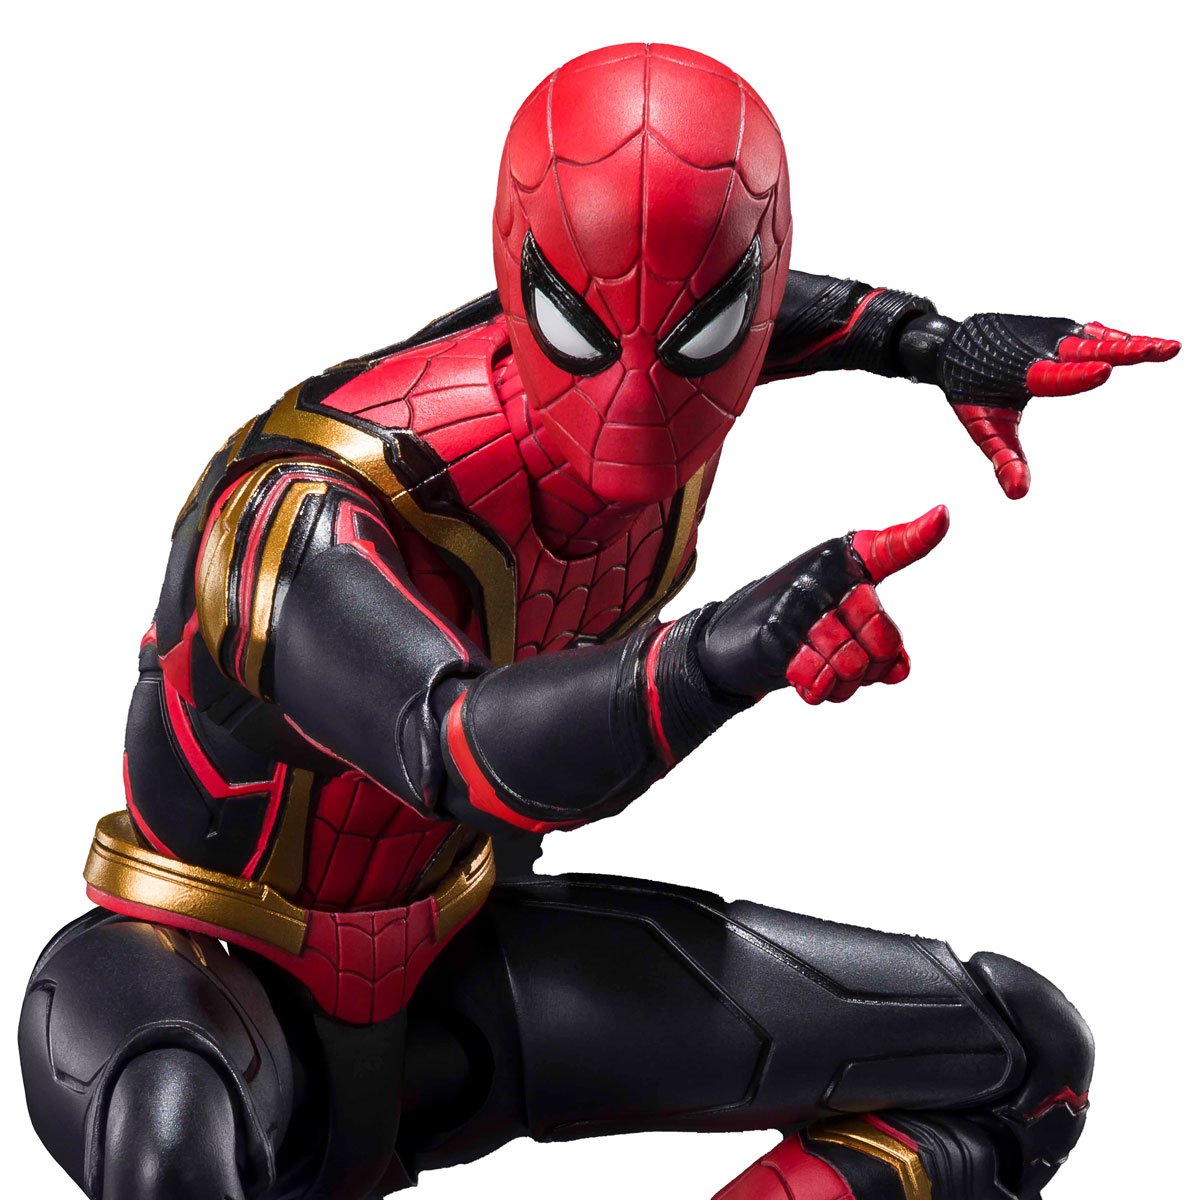 Spider-Man: No Way Home Green Goblin S.H.Figuarts Action Figure